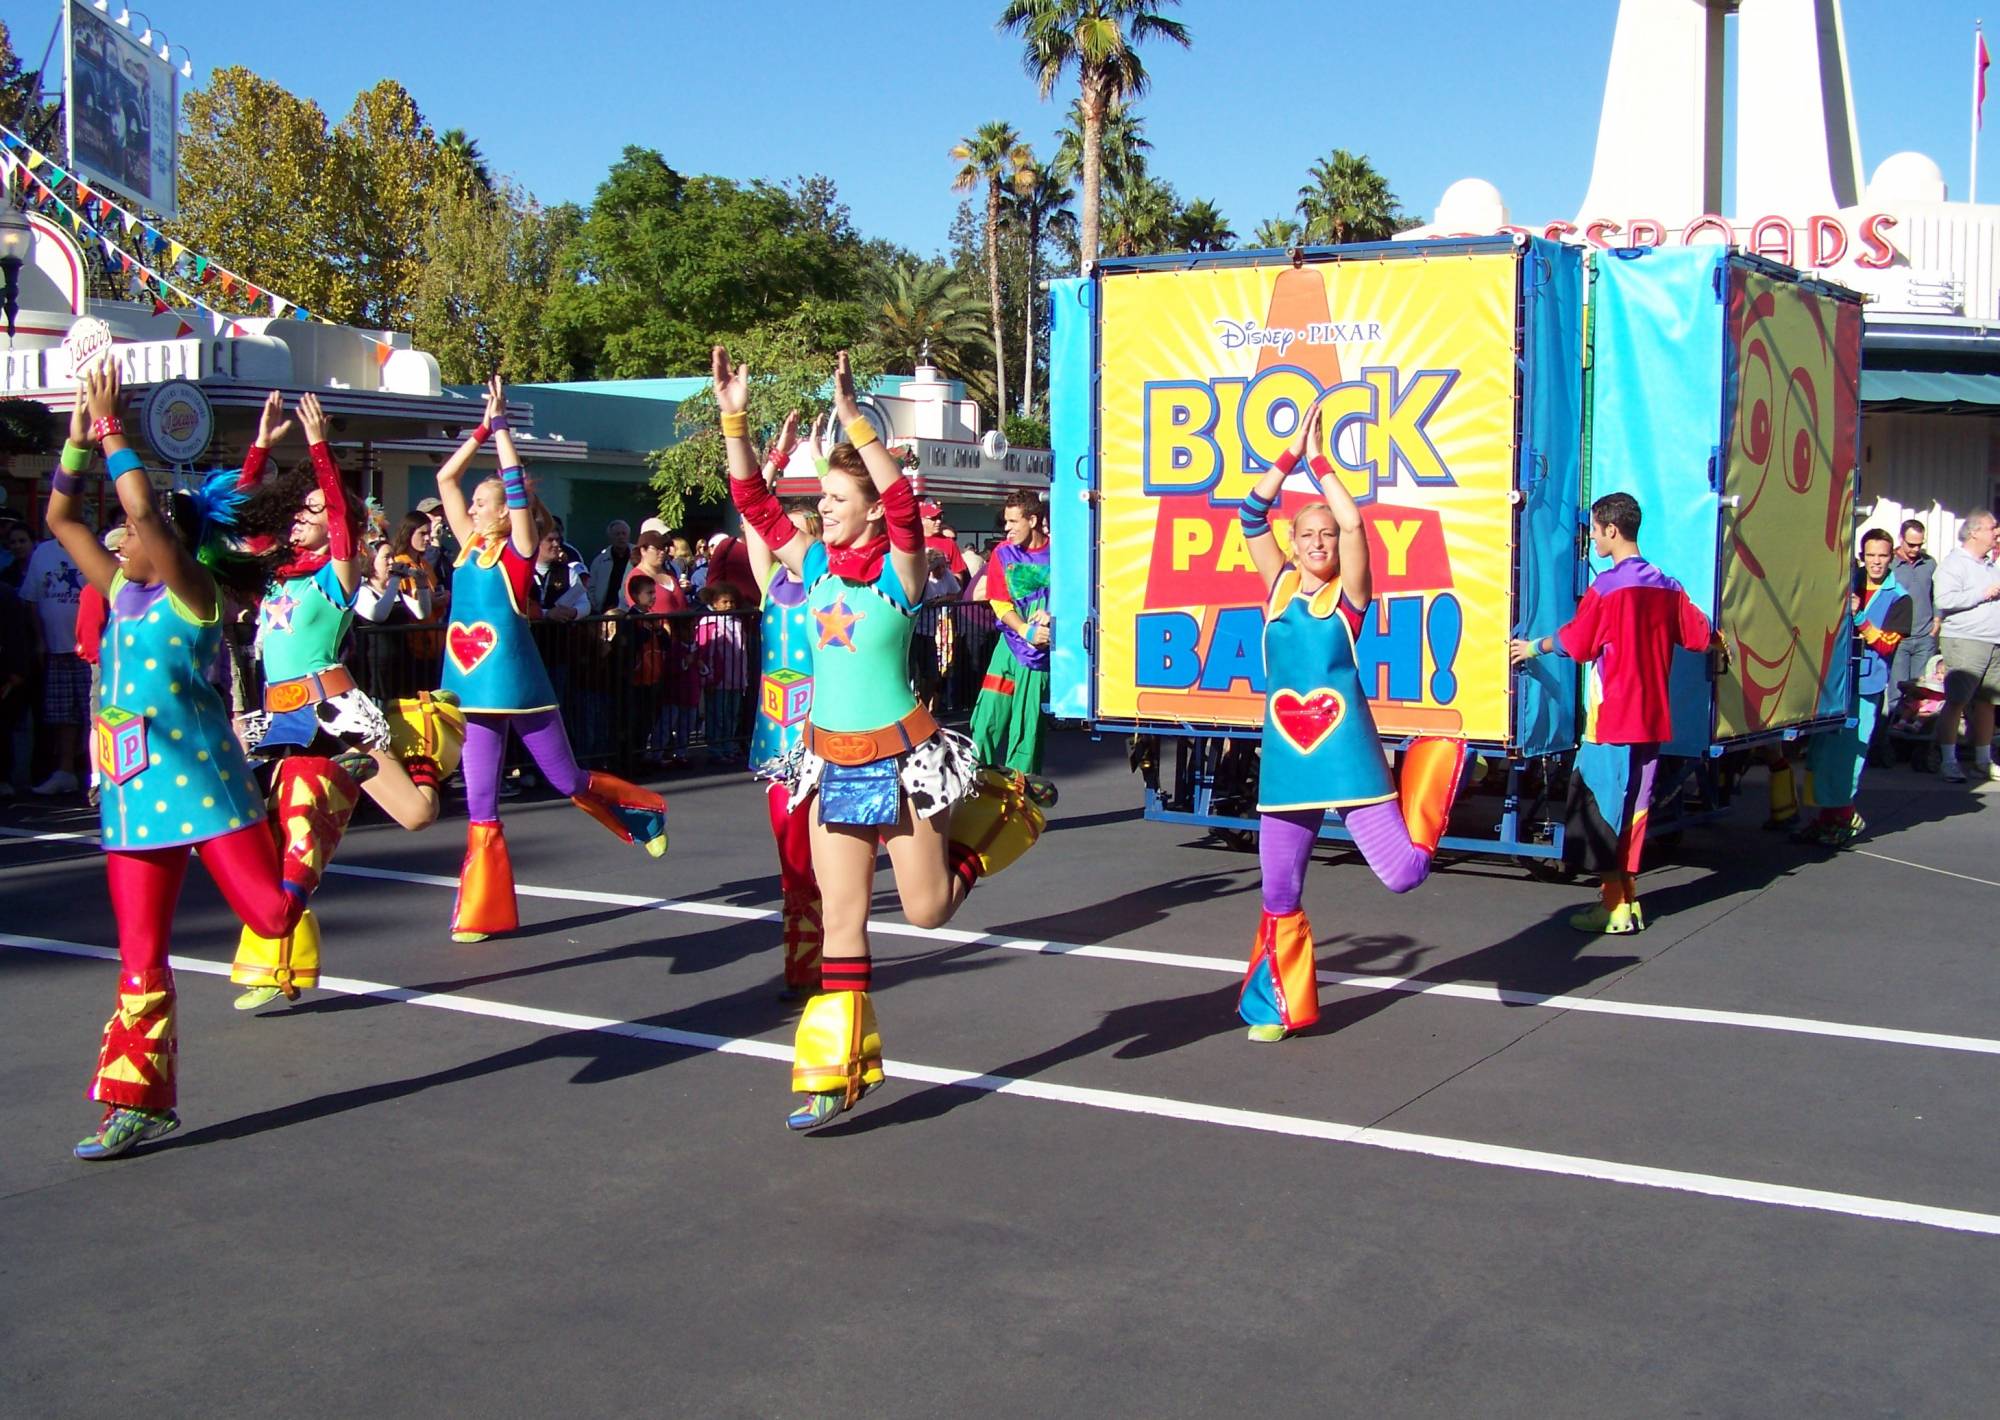 Disney's Hollywood Studio-Block Party Bash